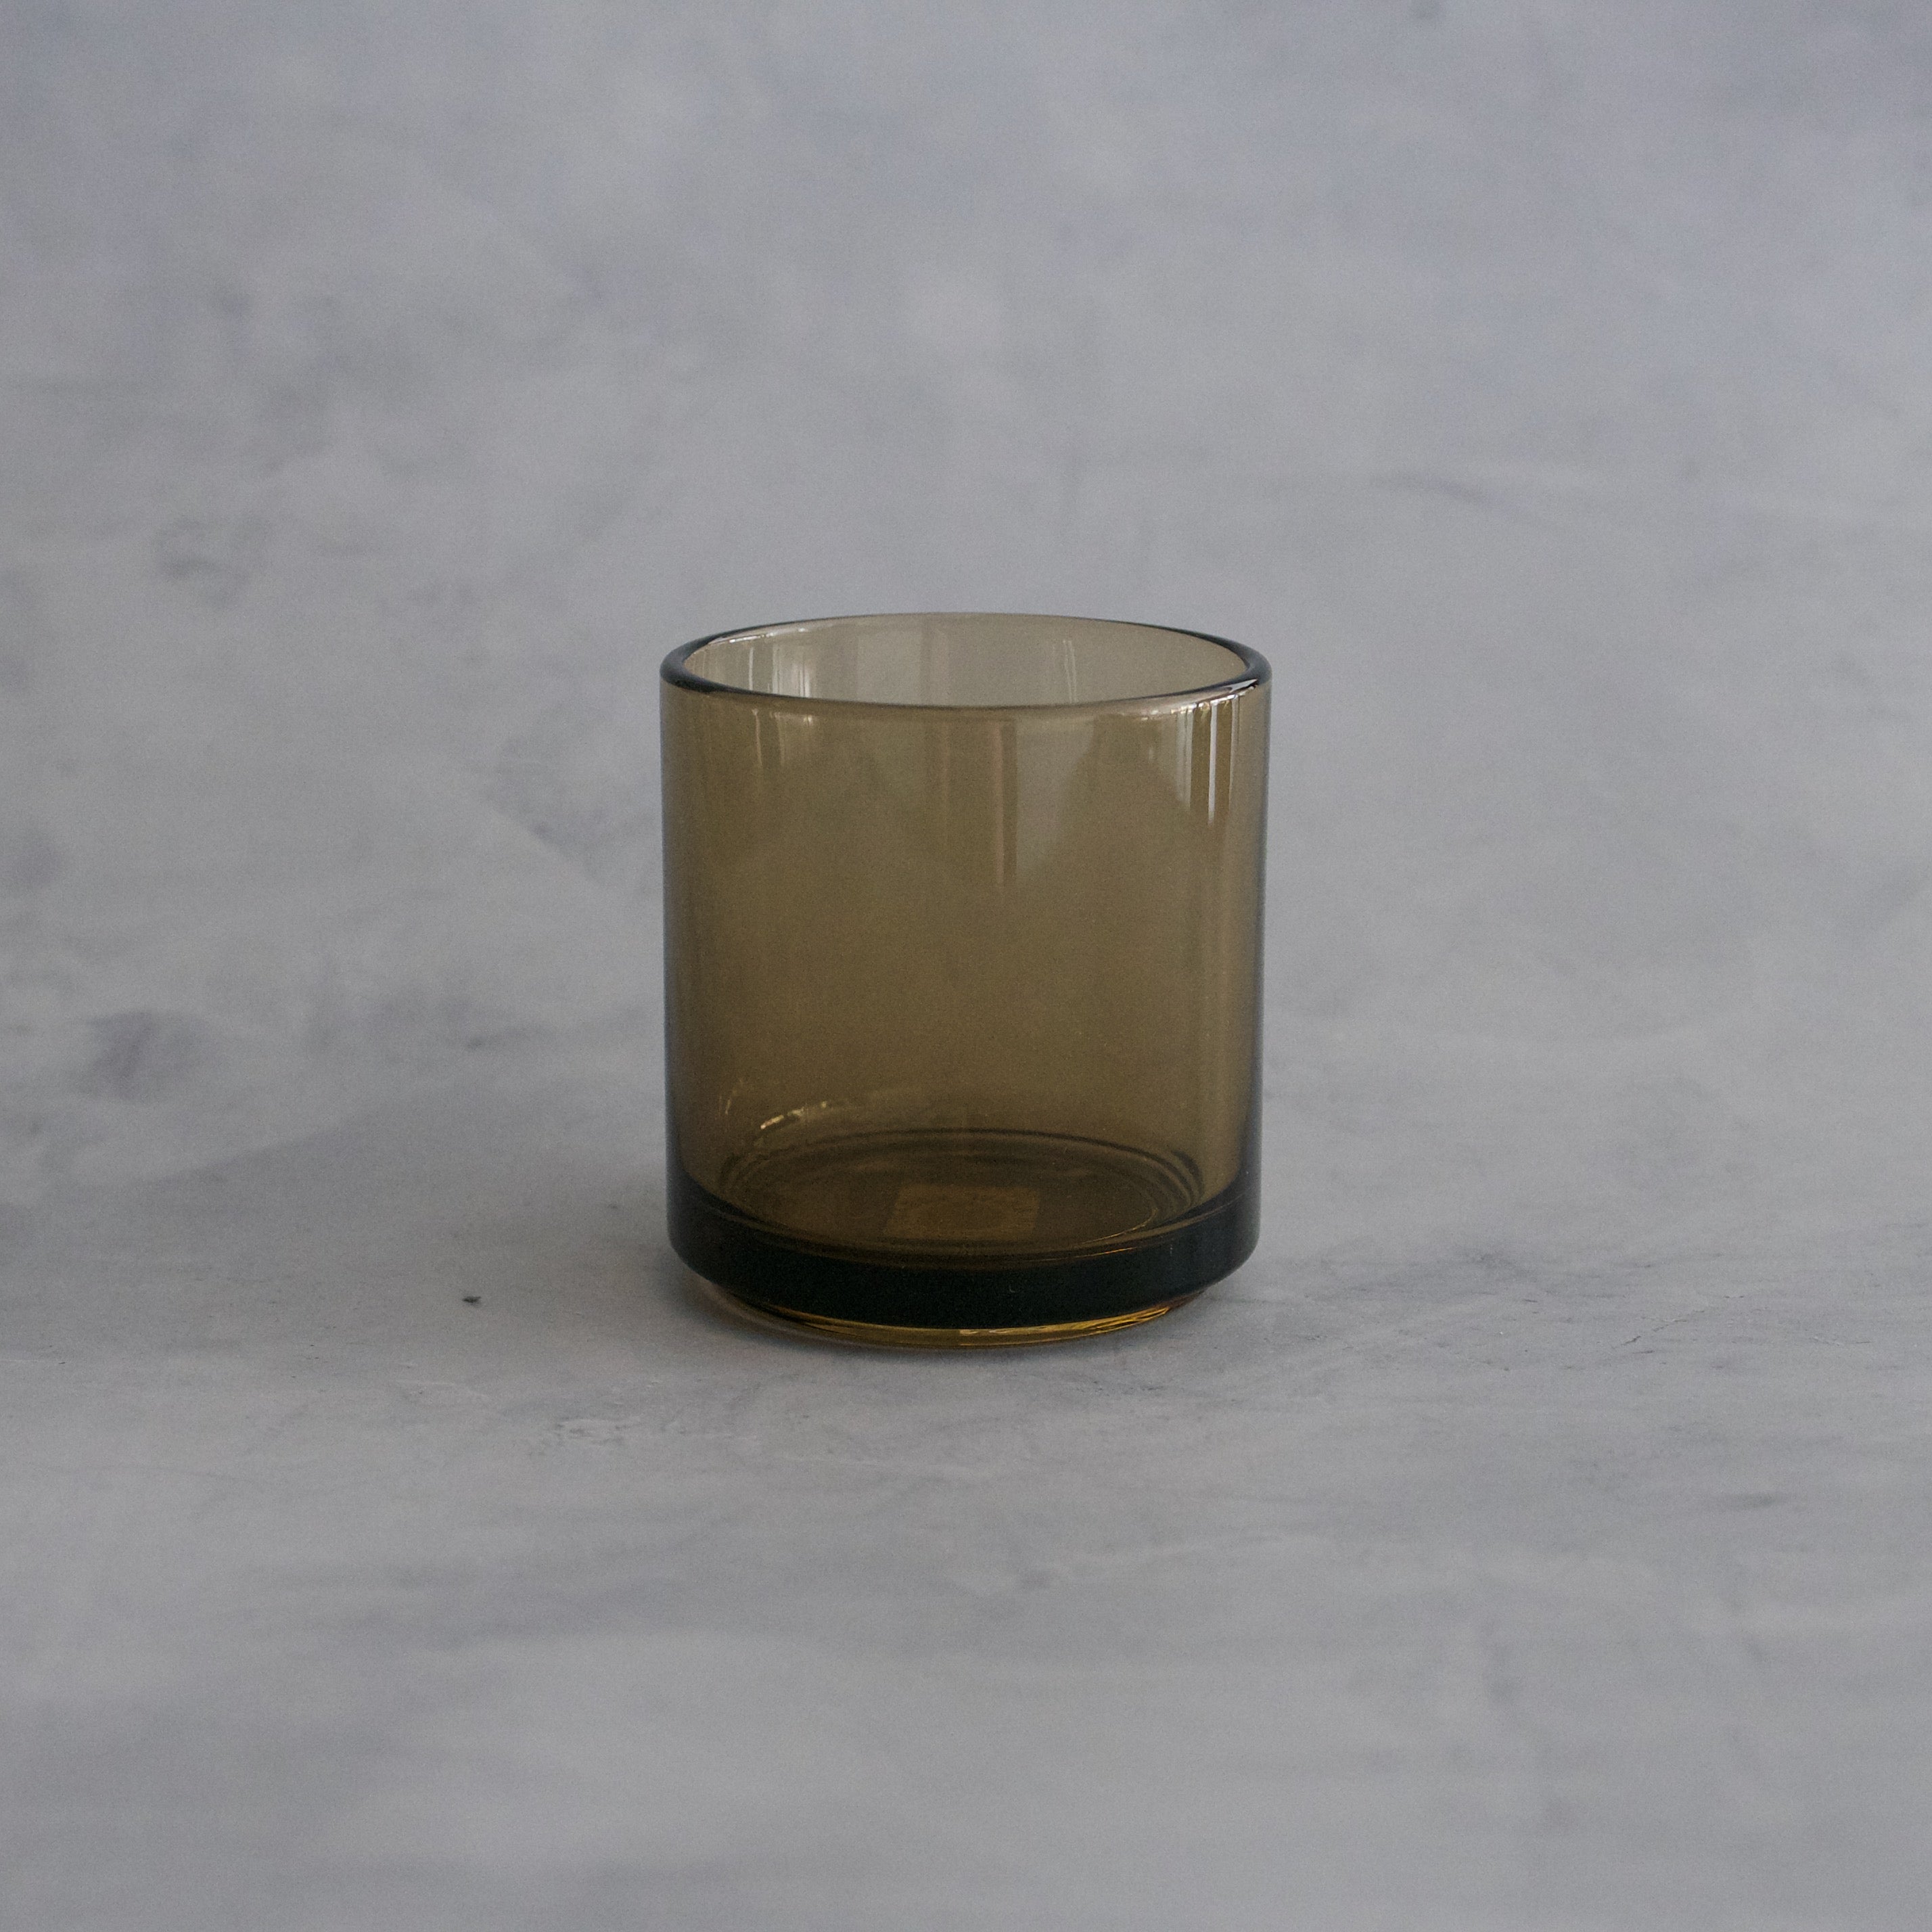 Hasami Porcelain Glass Tumbler Clear (3-pack)